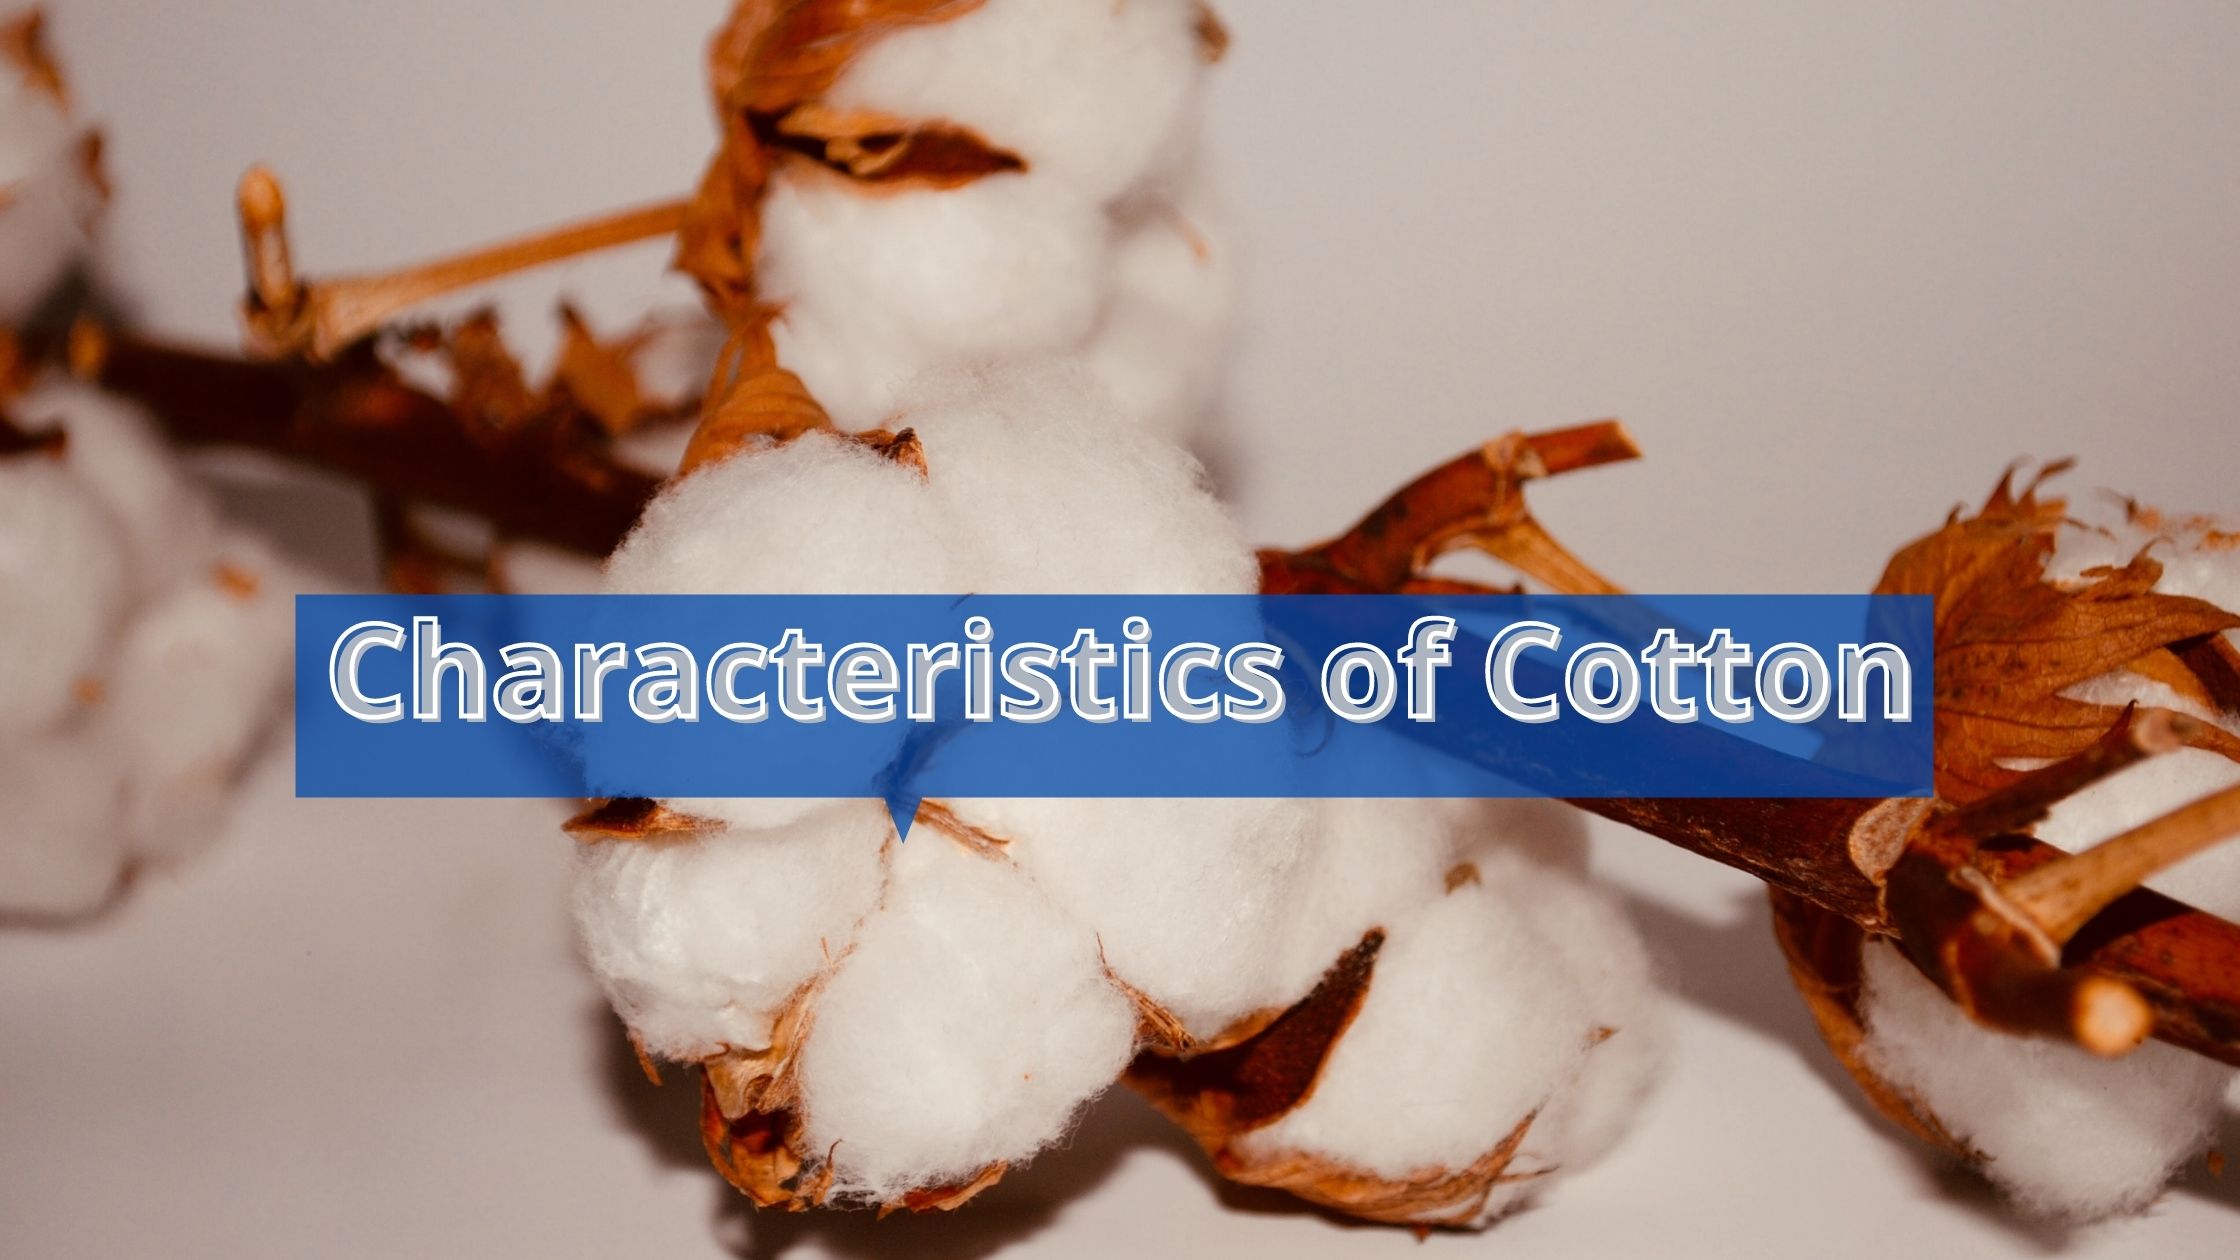 Characteristics of cotton